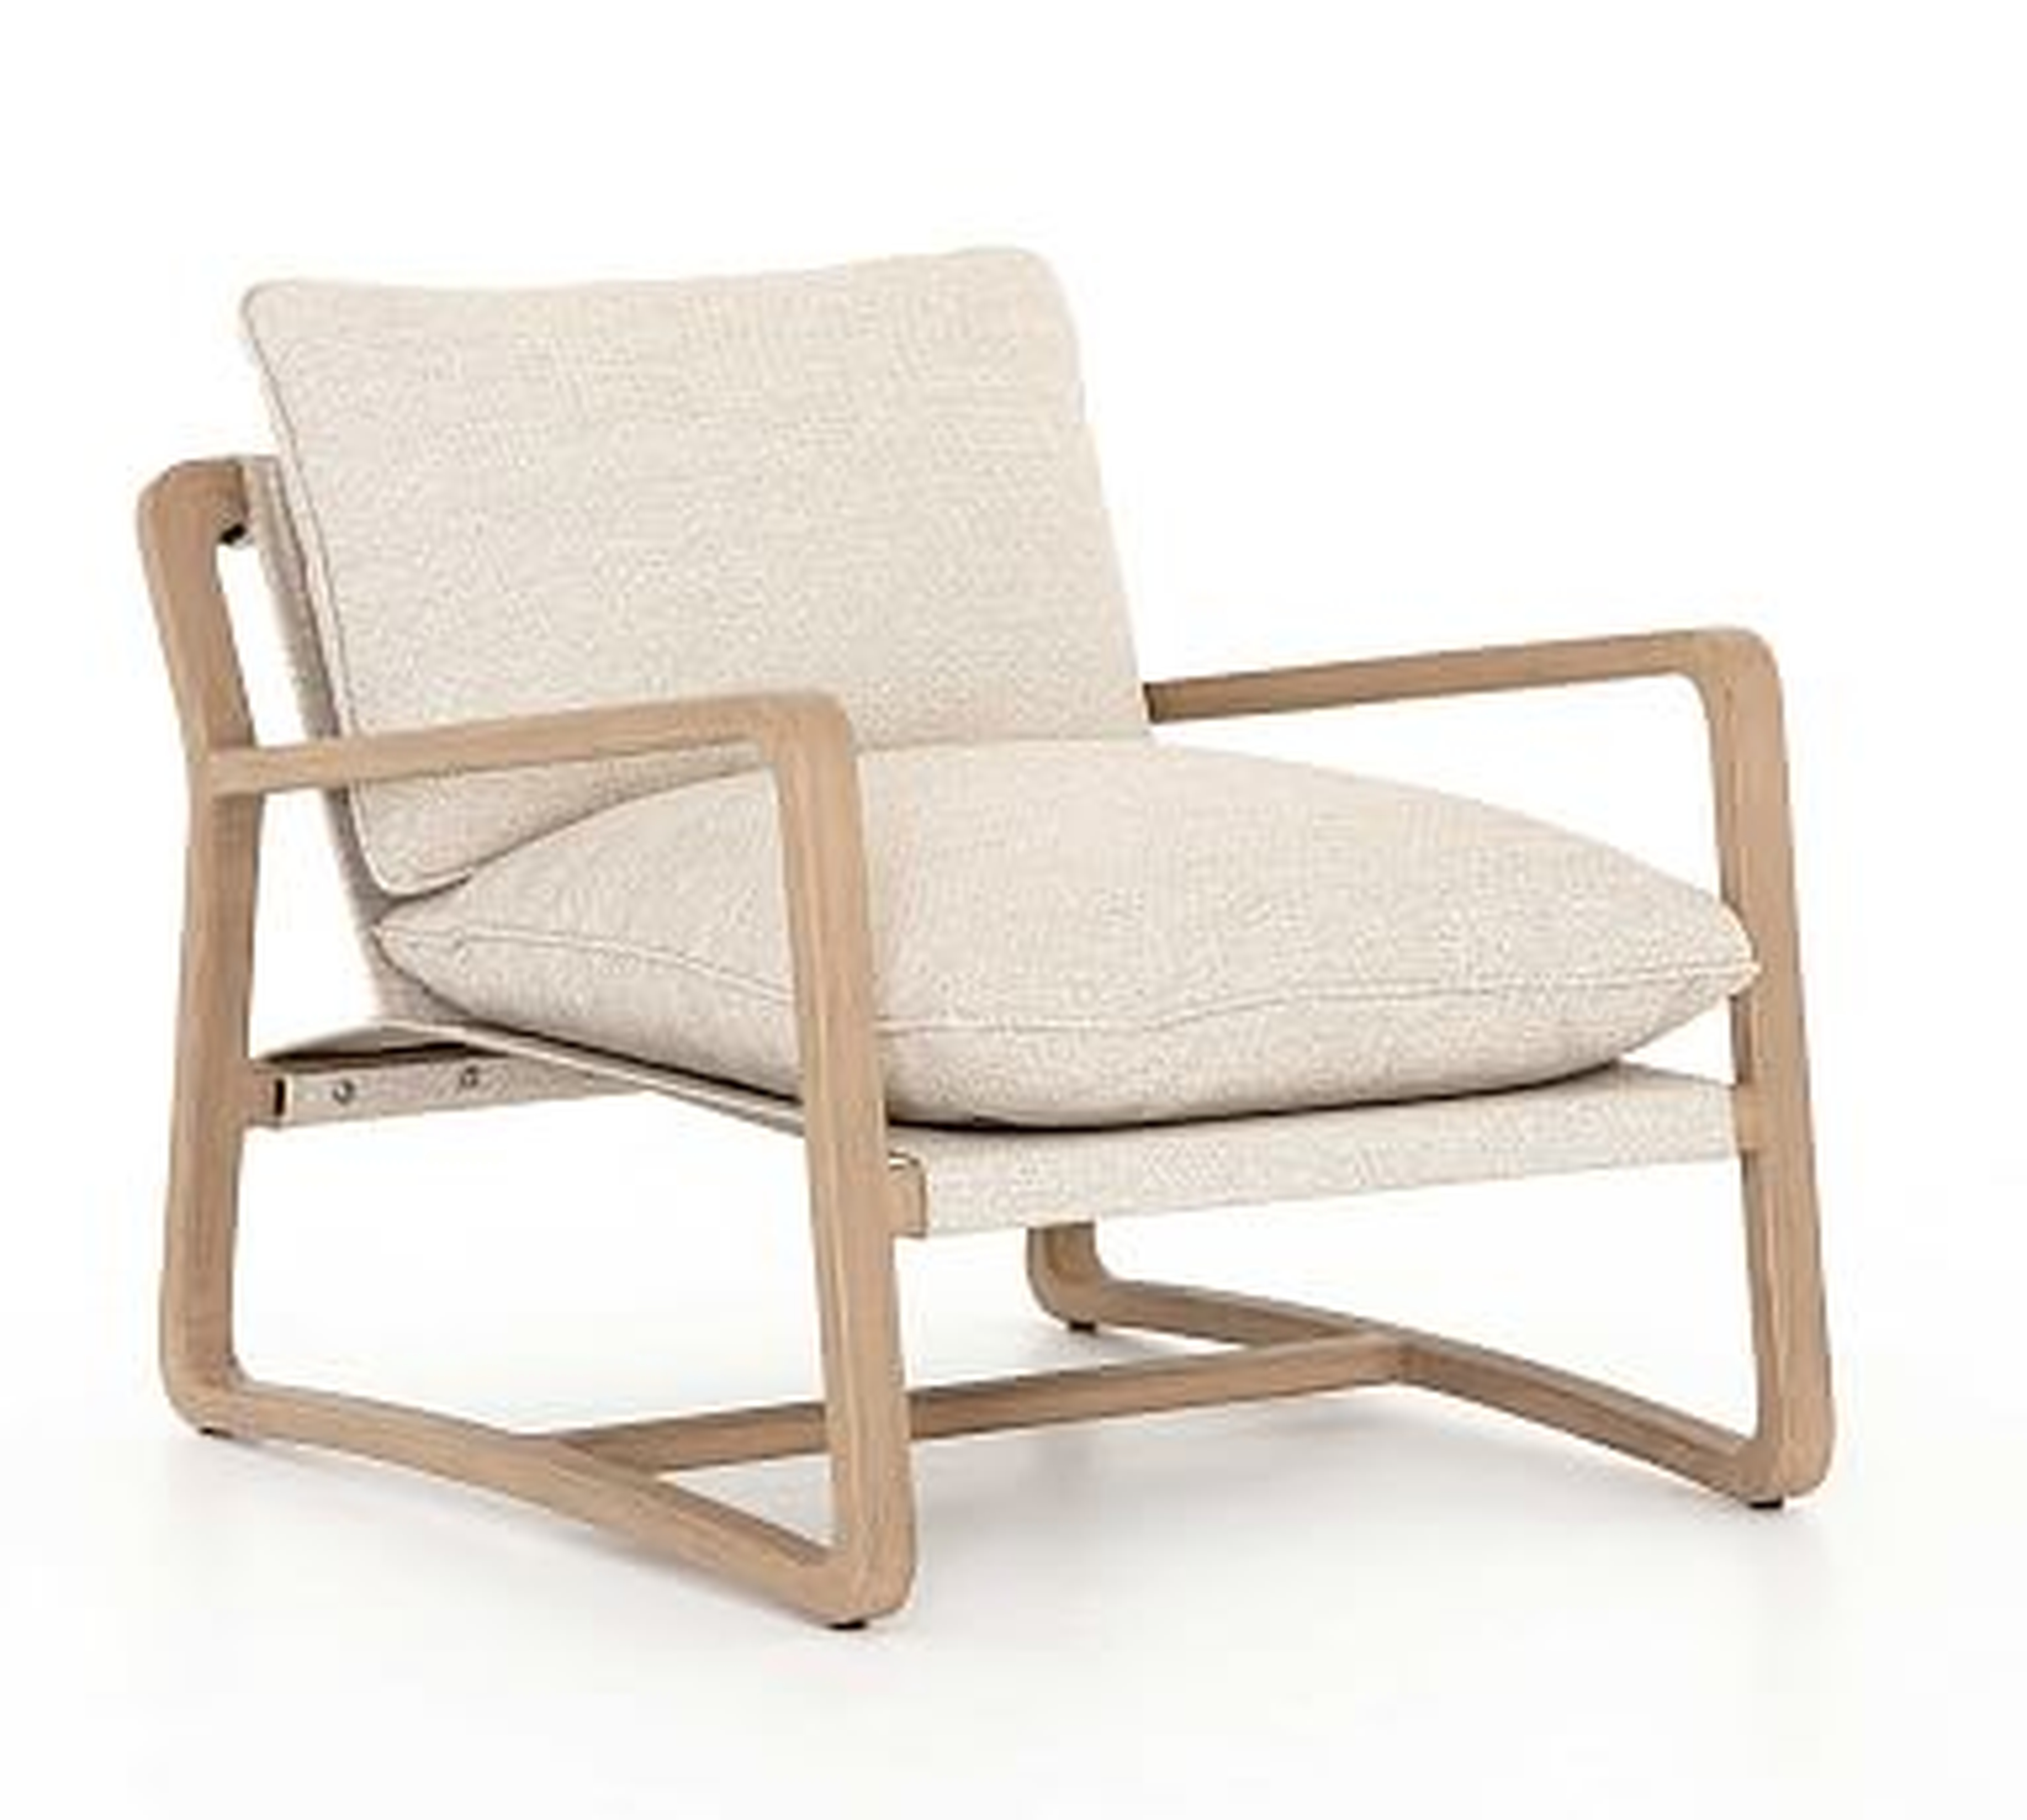 Laika FSC(R) Teak Outdoor Lounge Chair, Sand & Brown - Pottery Barn